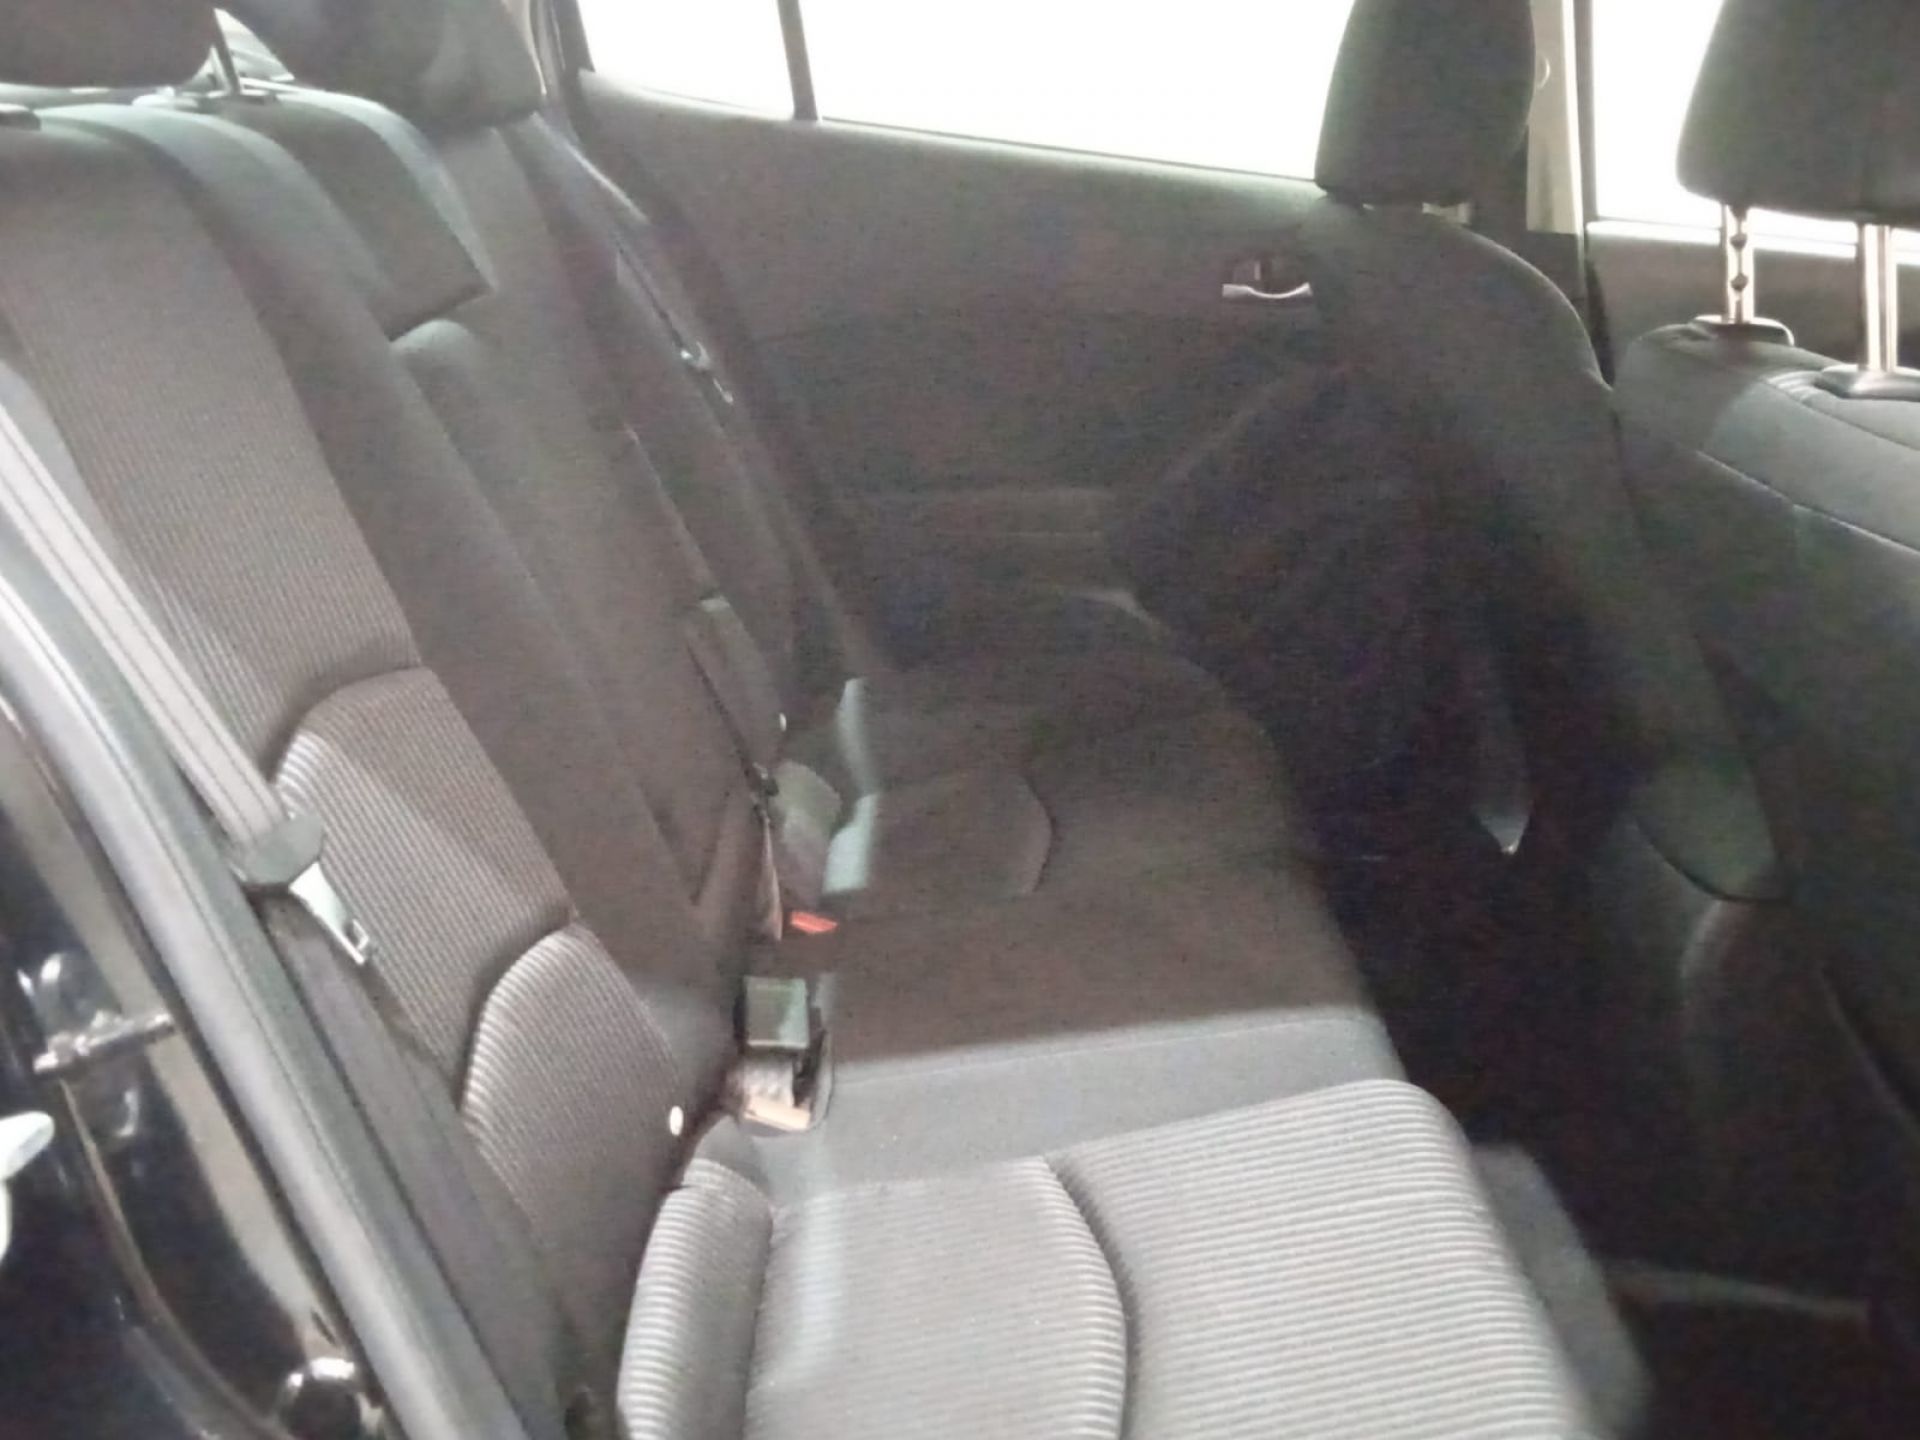 Mazda 3 2.2 DE 150 MT Luxury Safety SDN